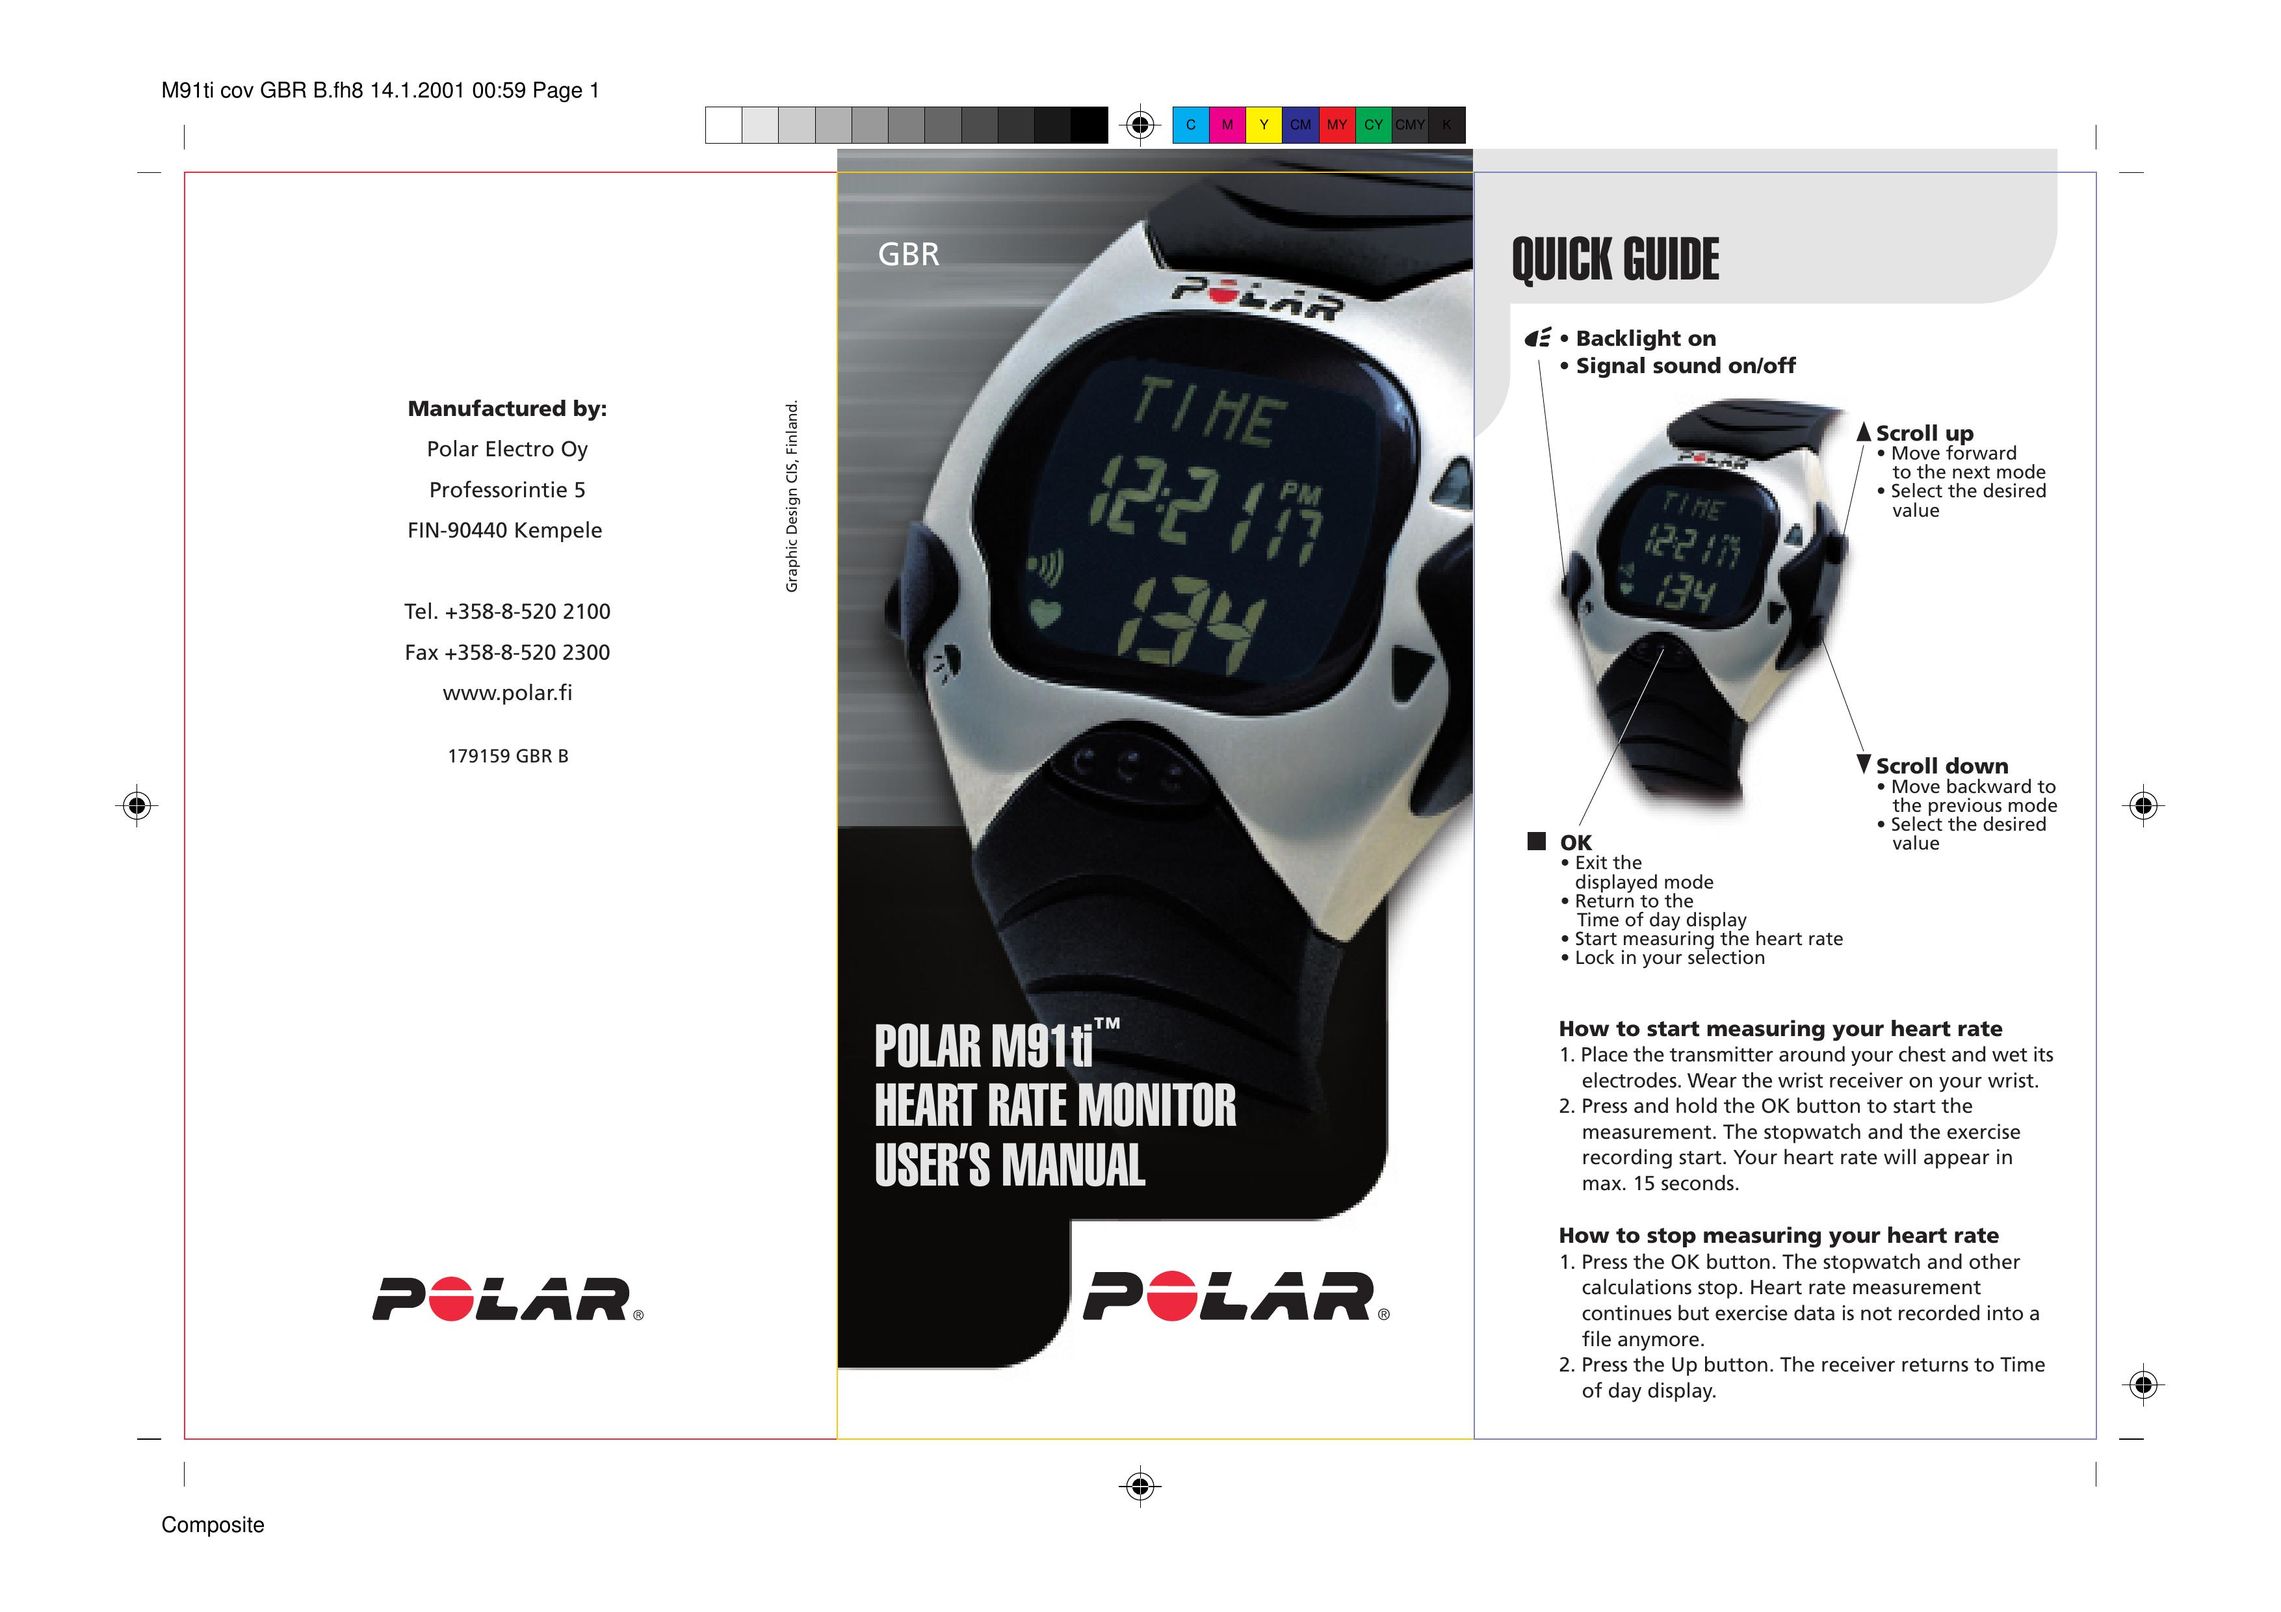 Polar GBR Heart Rate Monitor User Manual